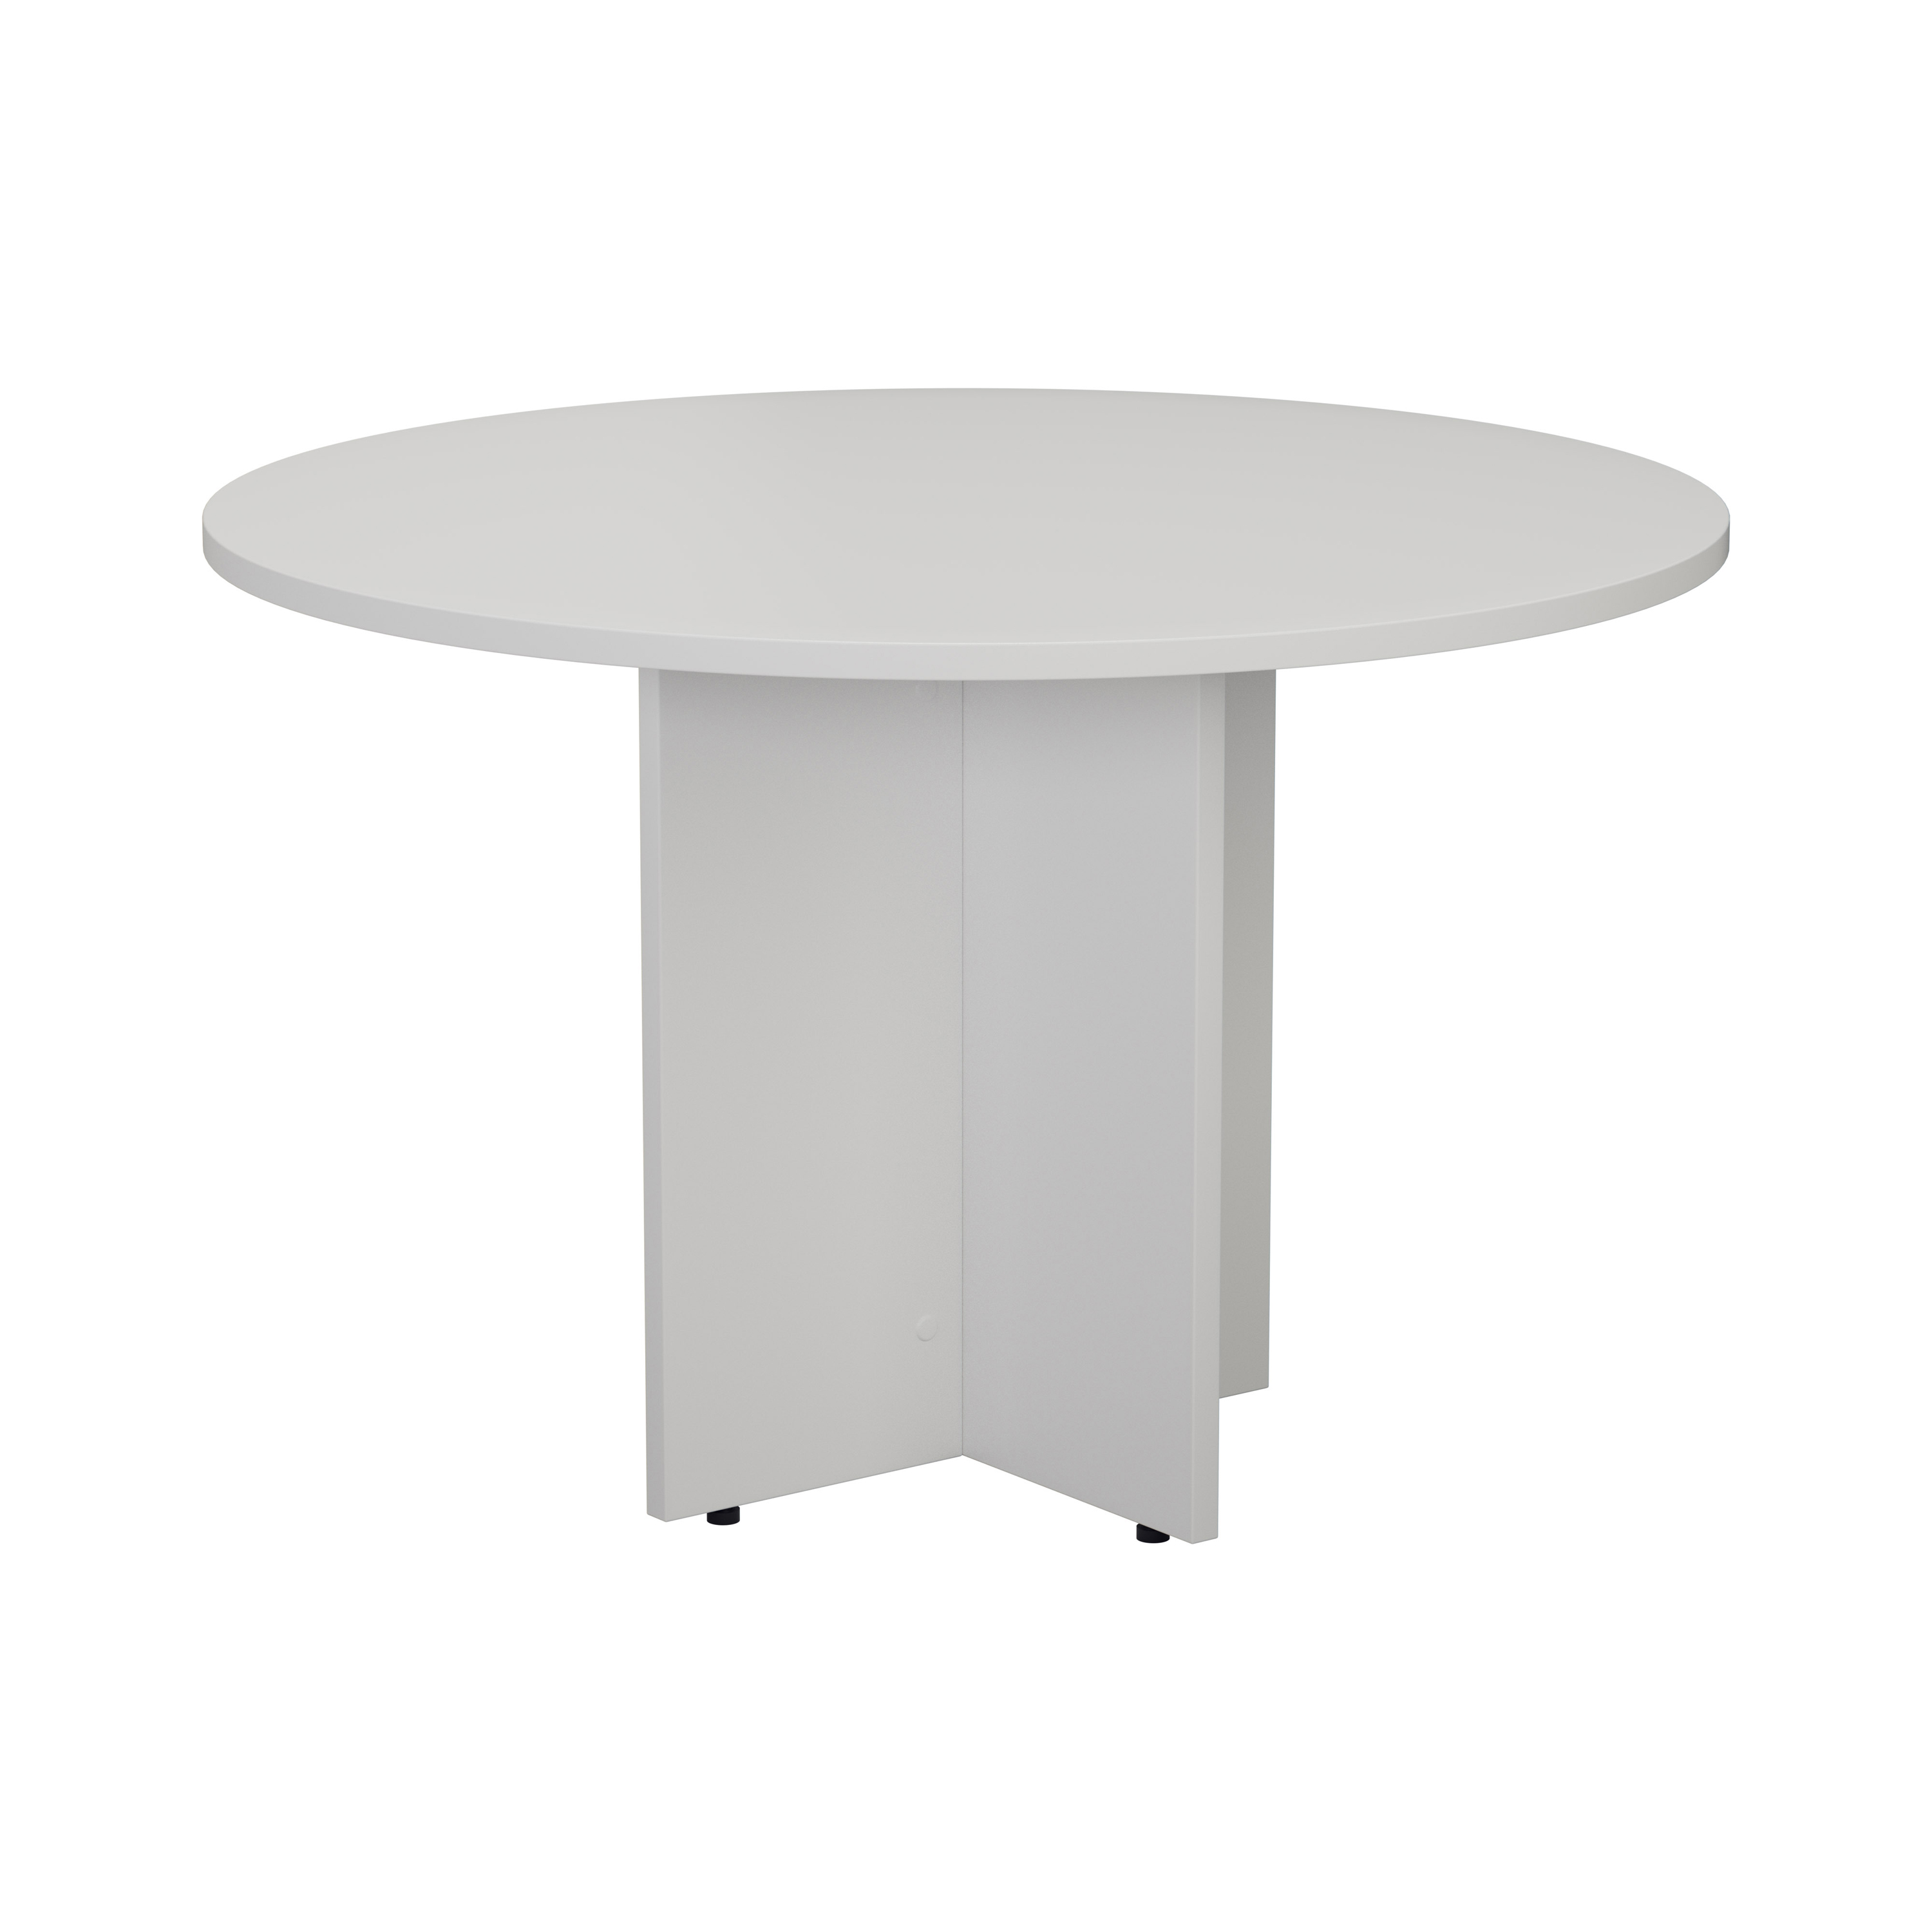 Round Meeting Table - White